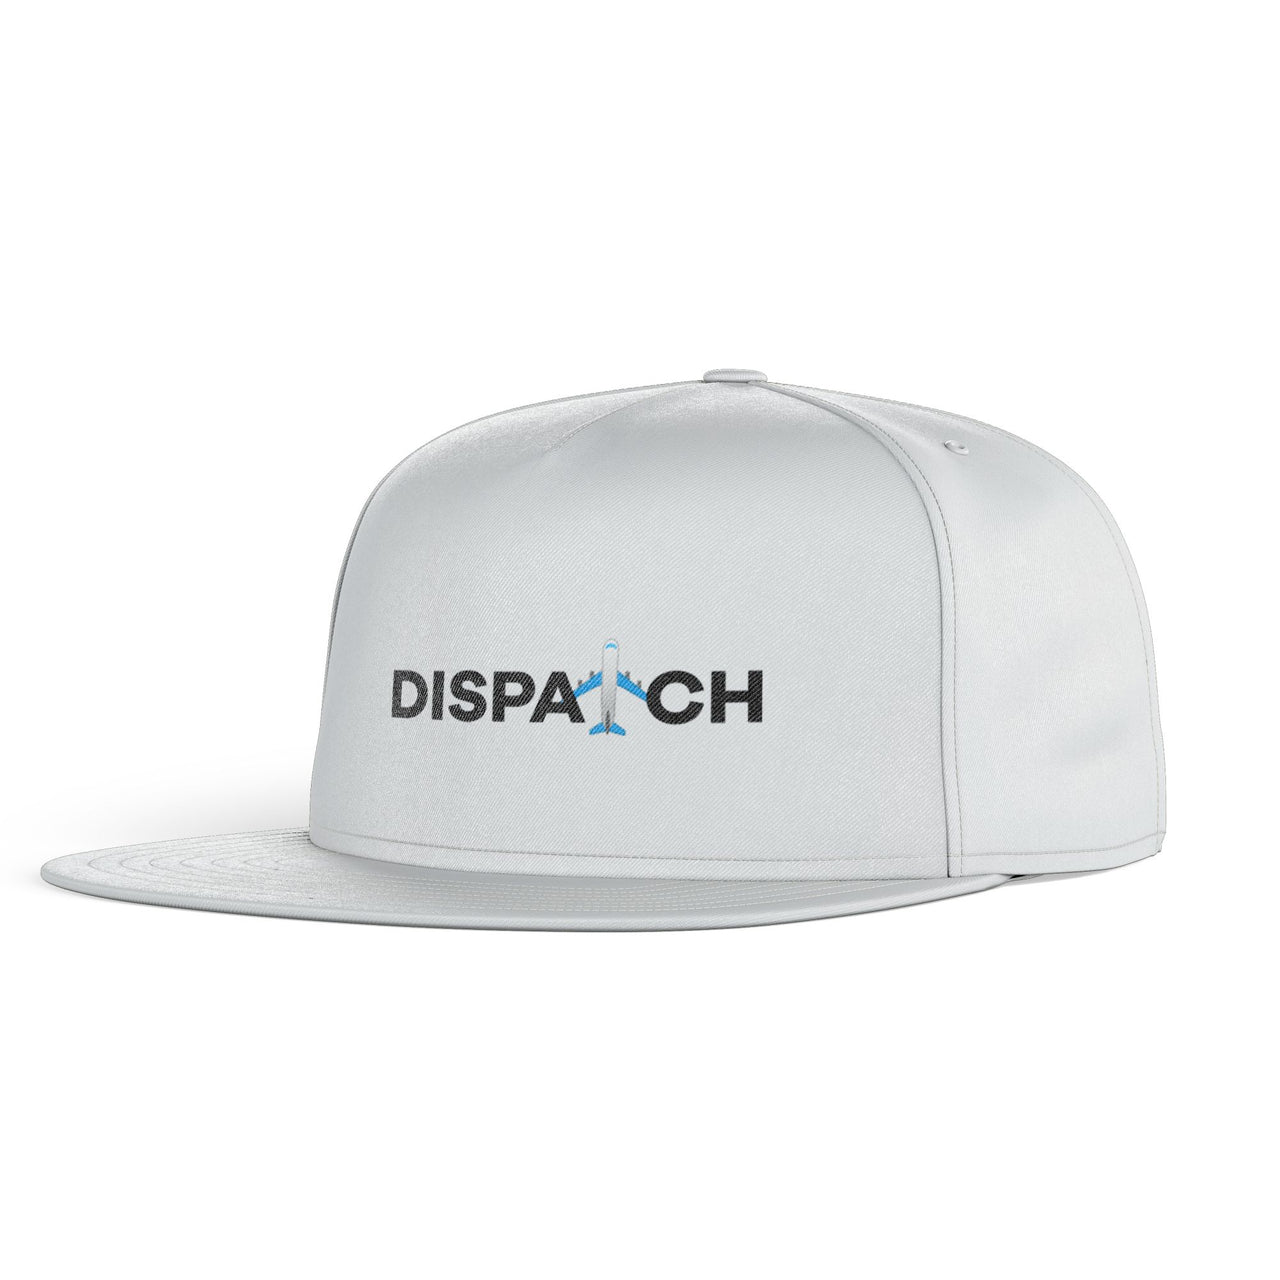 Dispatch Designed Snapback Caps & Hats